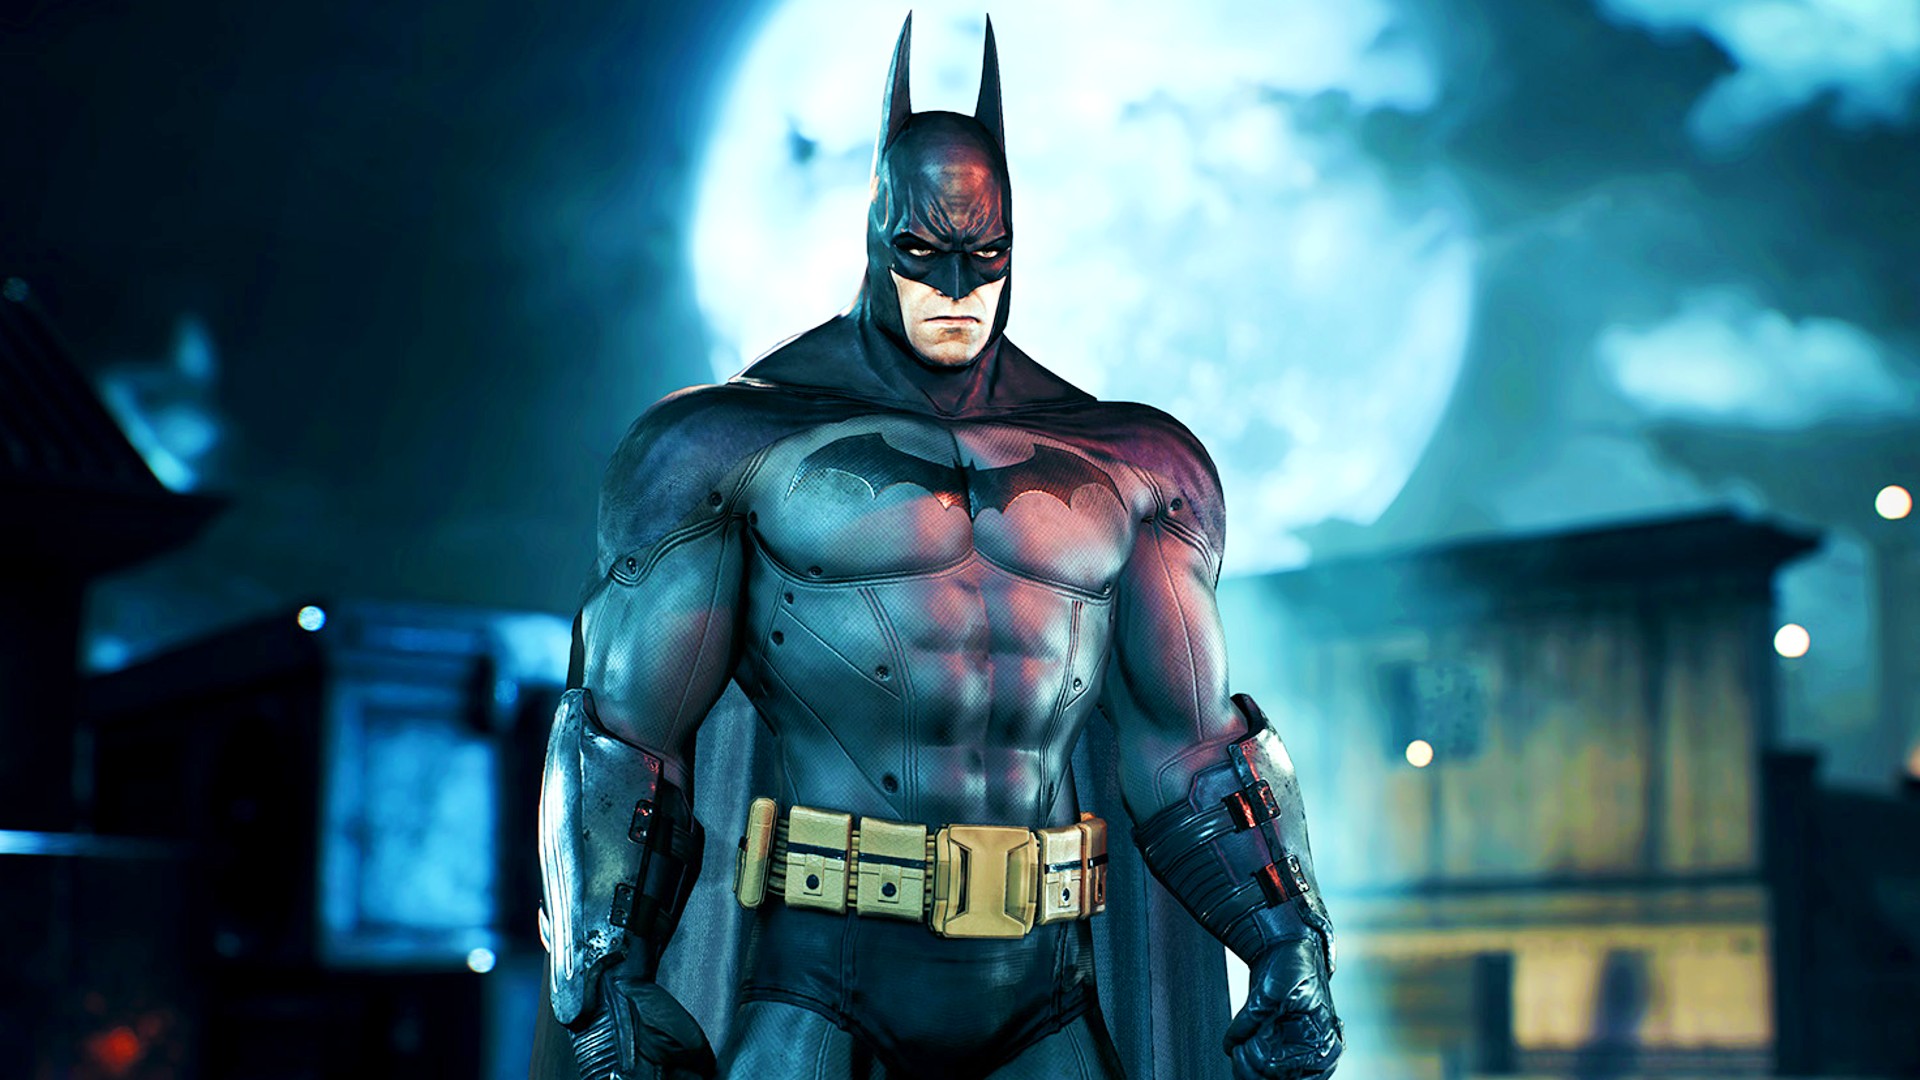 Batman: Arkham Origins' Launches To Mixed Reviews